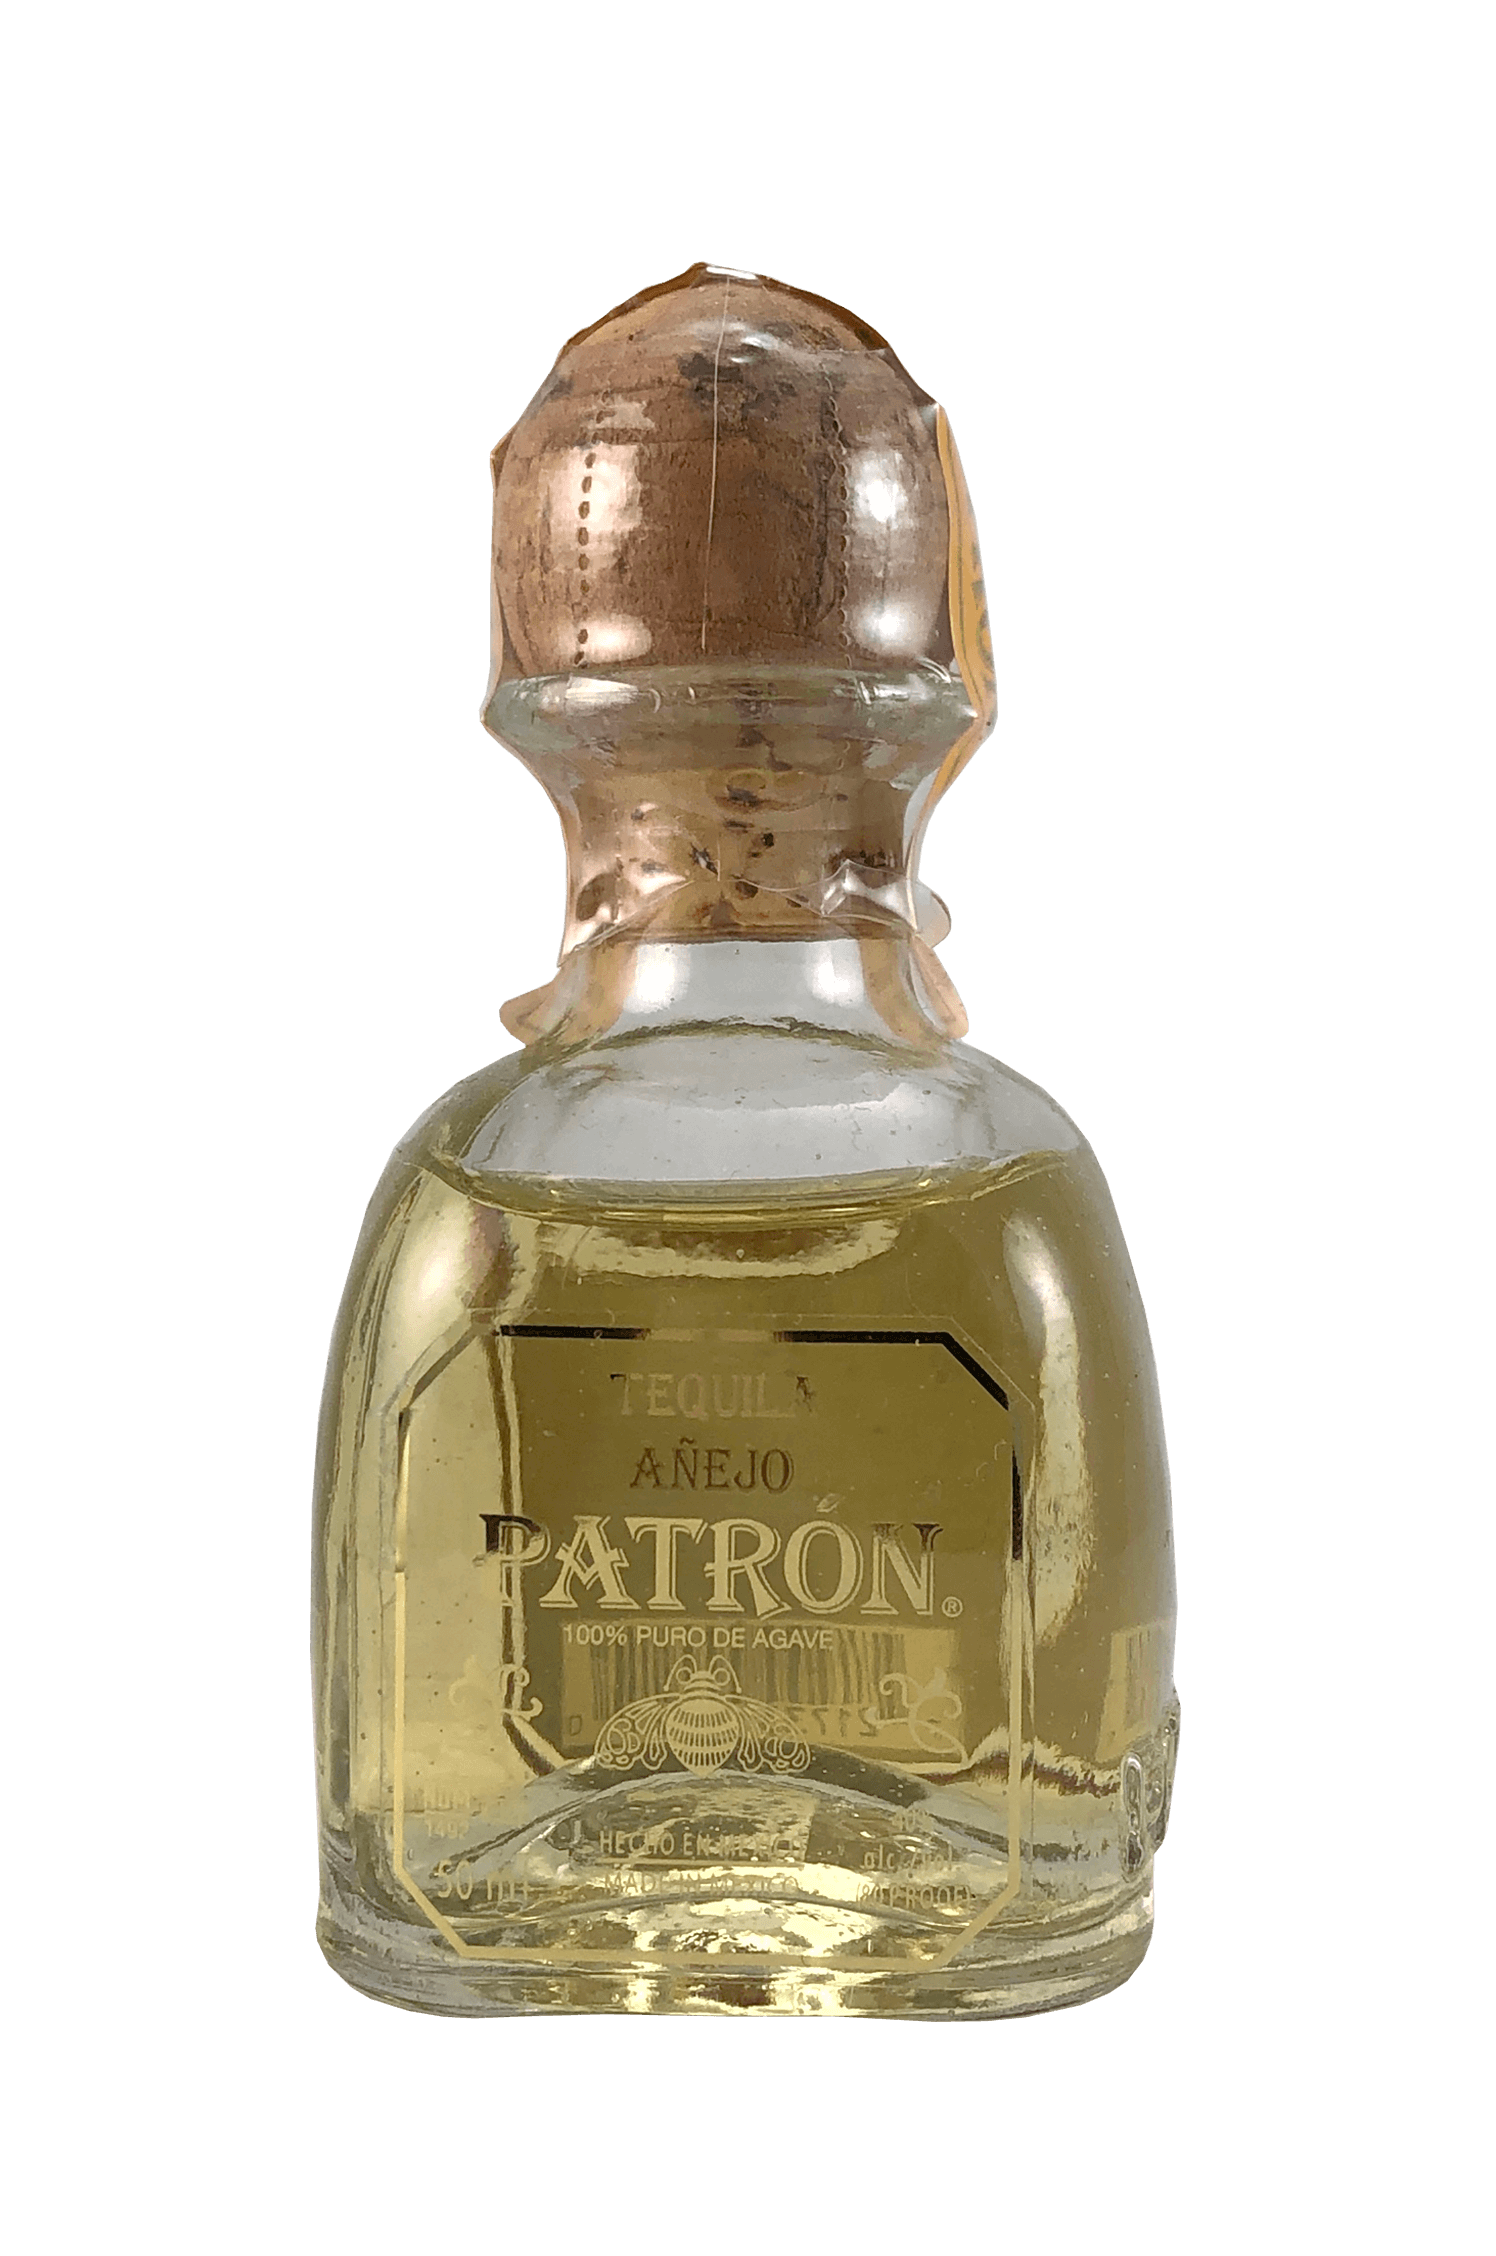 Tequila Aňejo Patrón